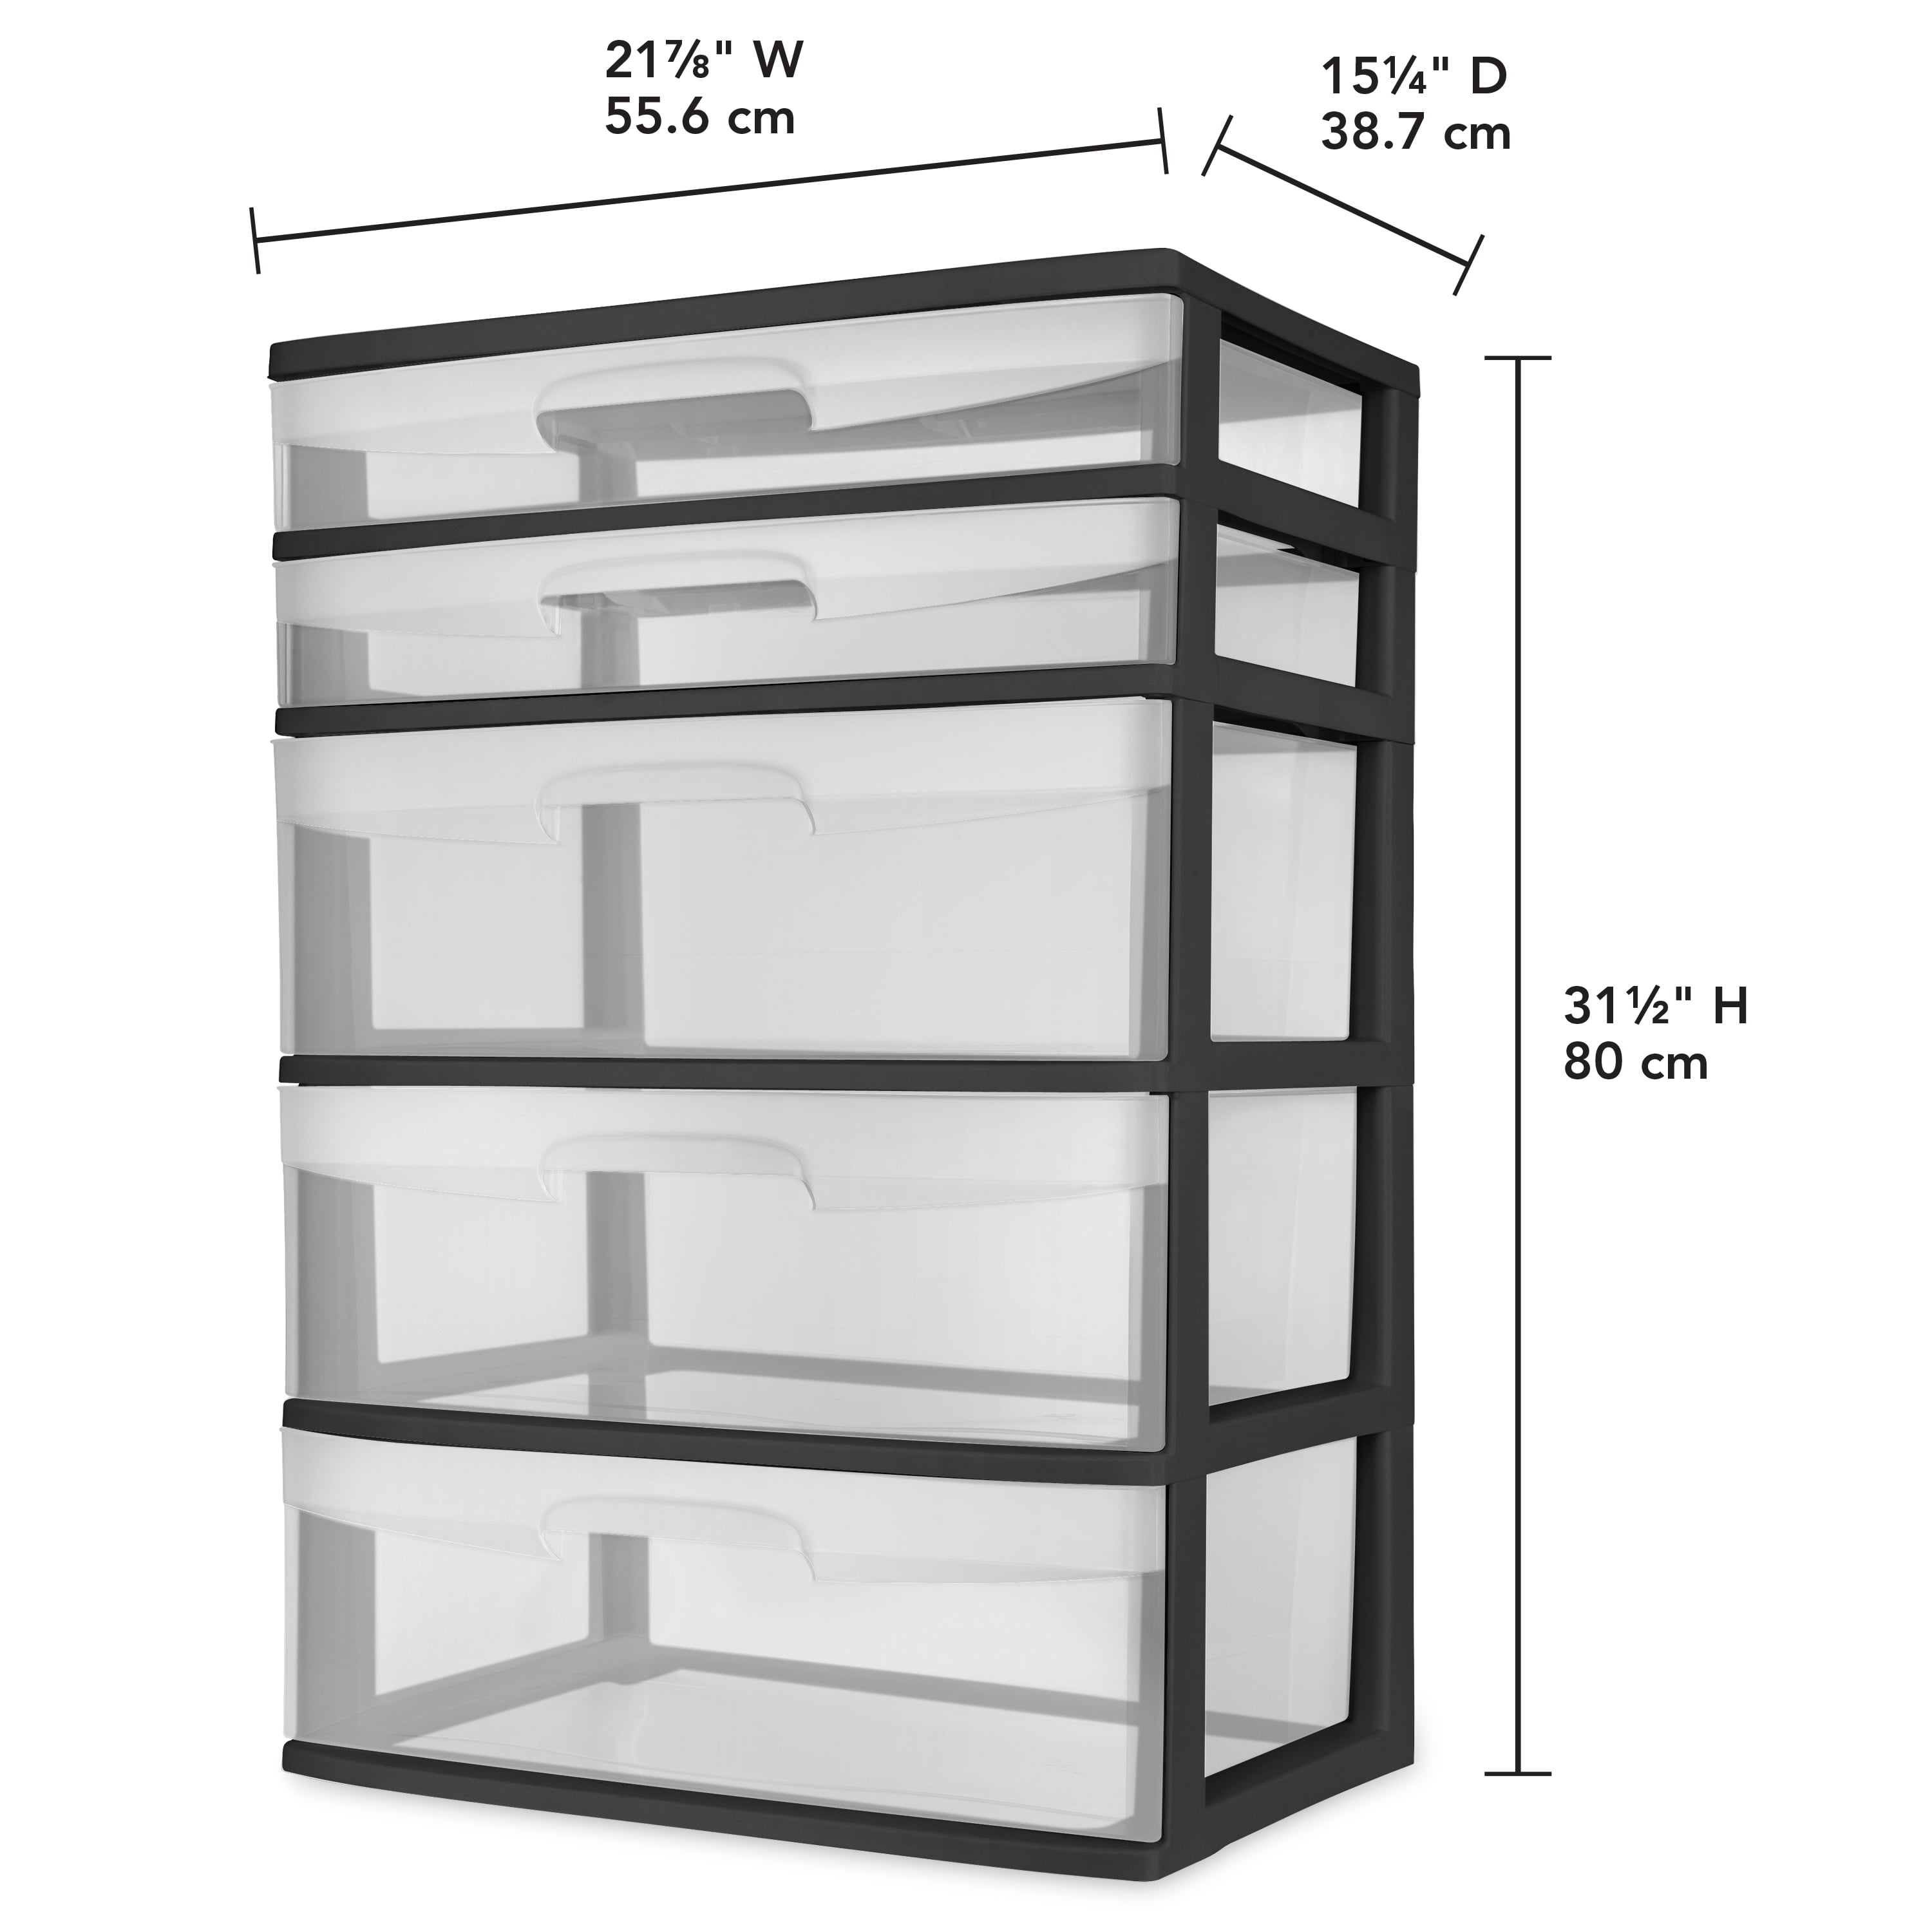 Sterilite 5-Drawer Wide Tower Multipurpose Versatile Storage Clear White Durable 